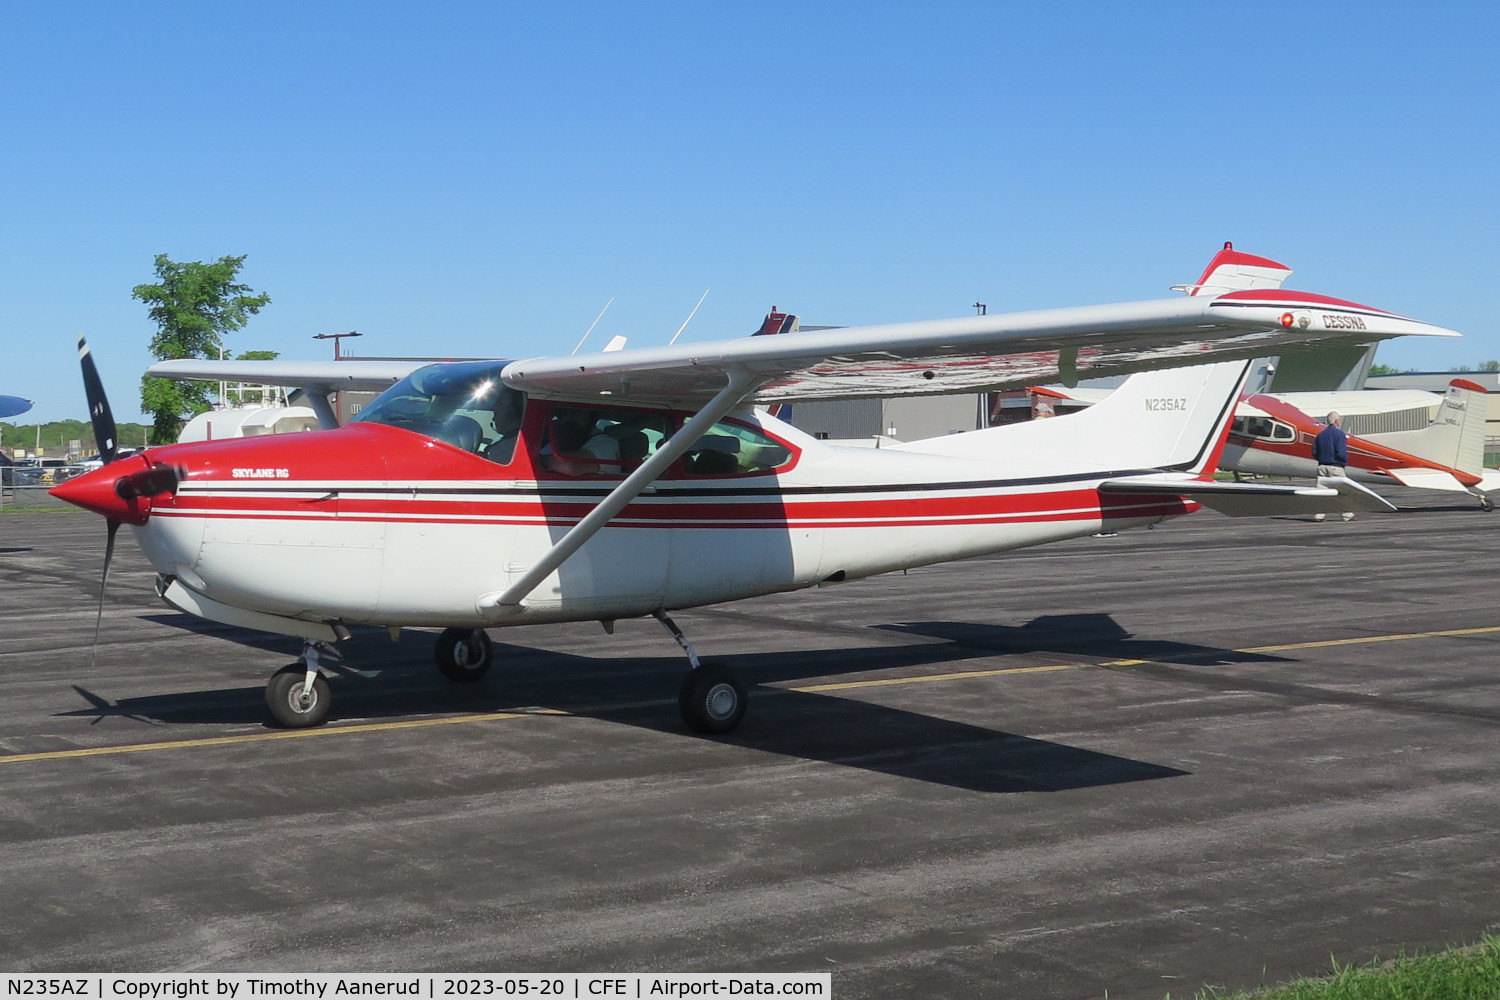 N235AZ, 1980 Cessna R182 Skylane RG C/N R18201658, 1980 Cessna R182, c/n: R18201658, The Great Minnesota Aviation Gathering 2023